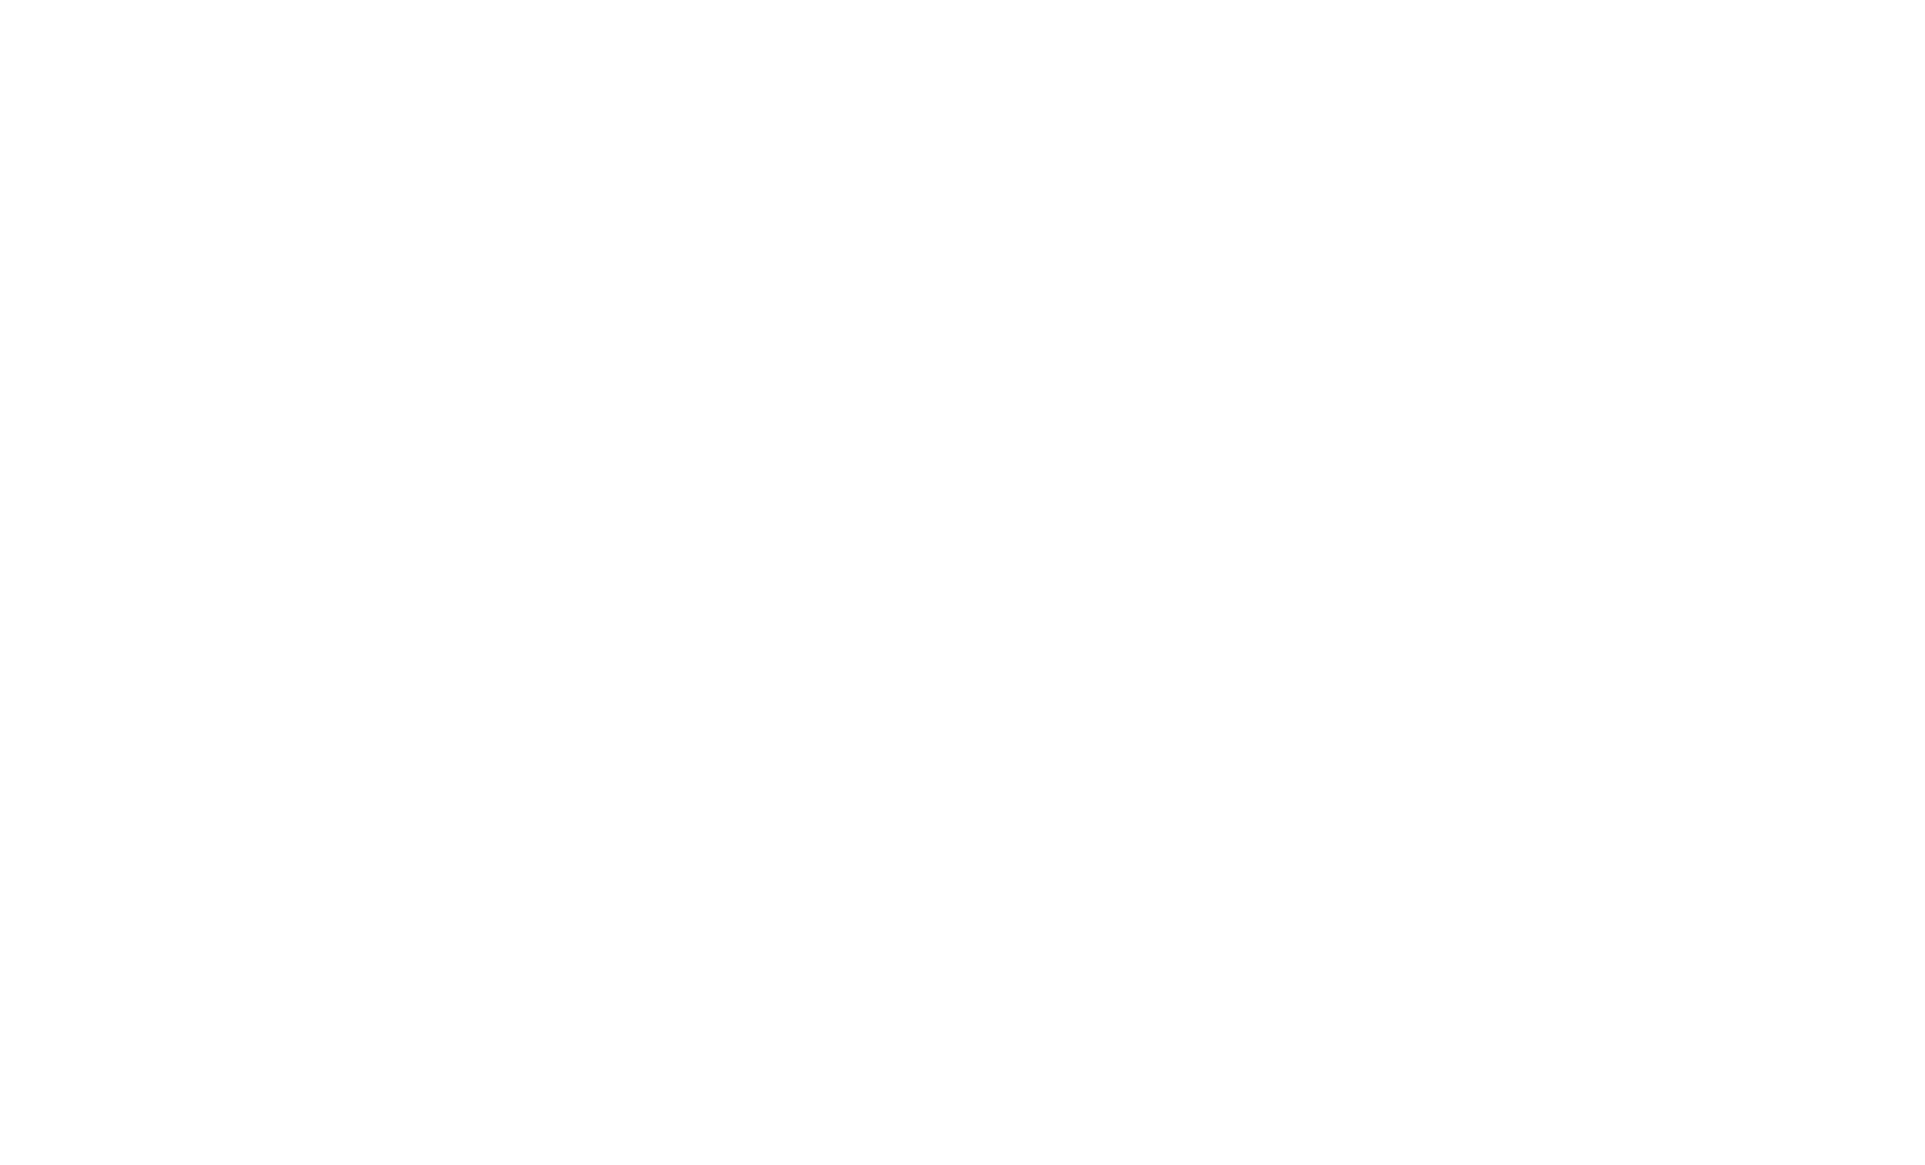 Grabowski Mariusz Sp. z o.o.